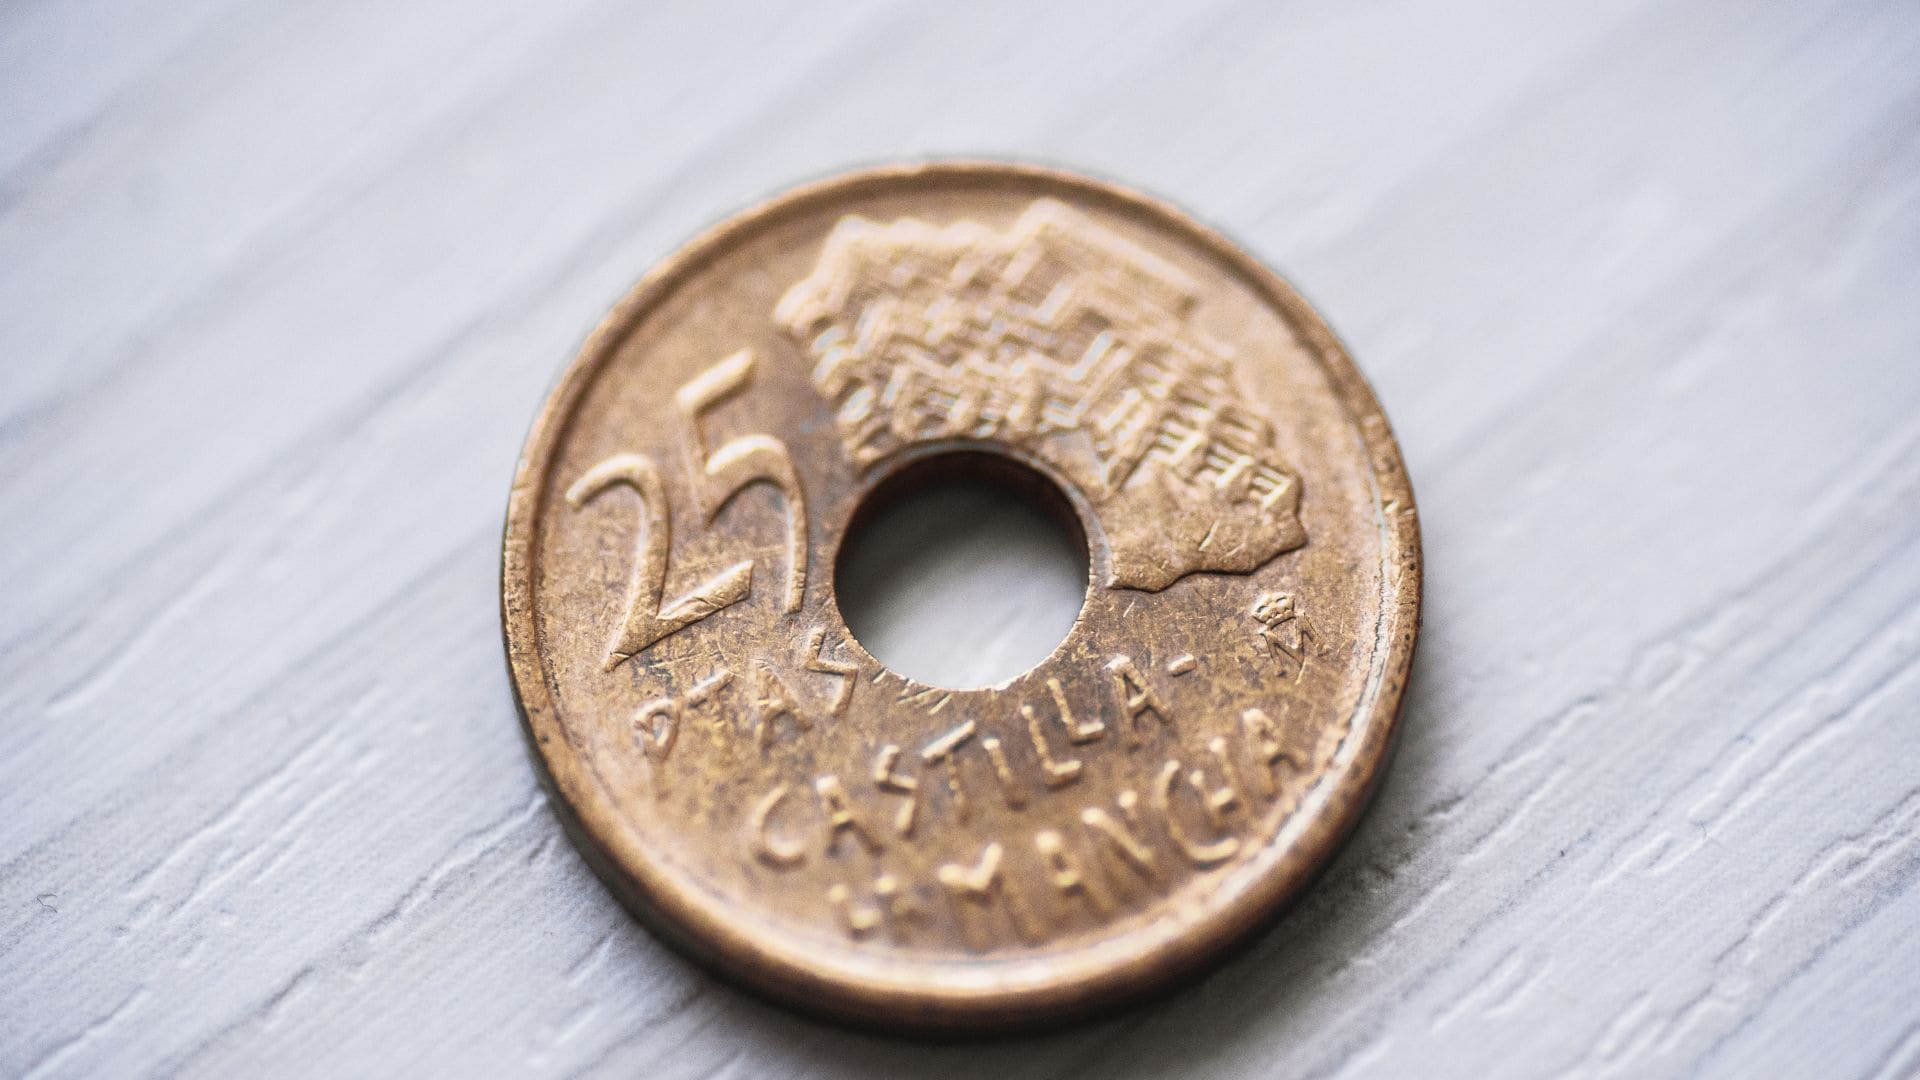 Moneda 25 pesetas